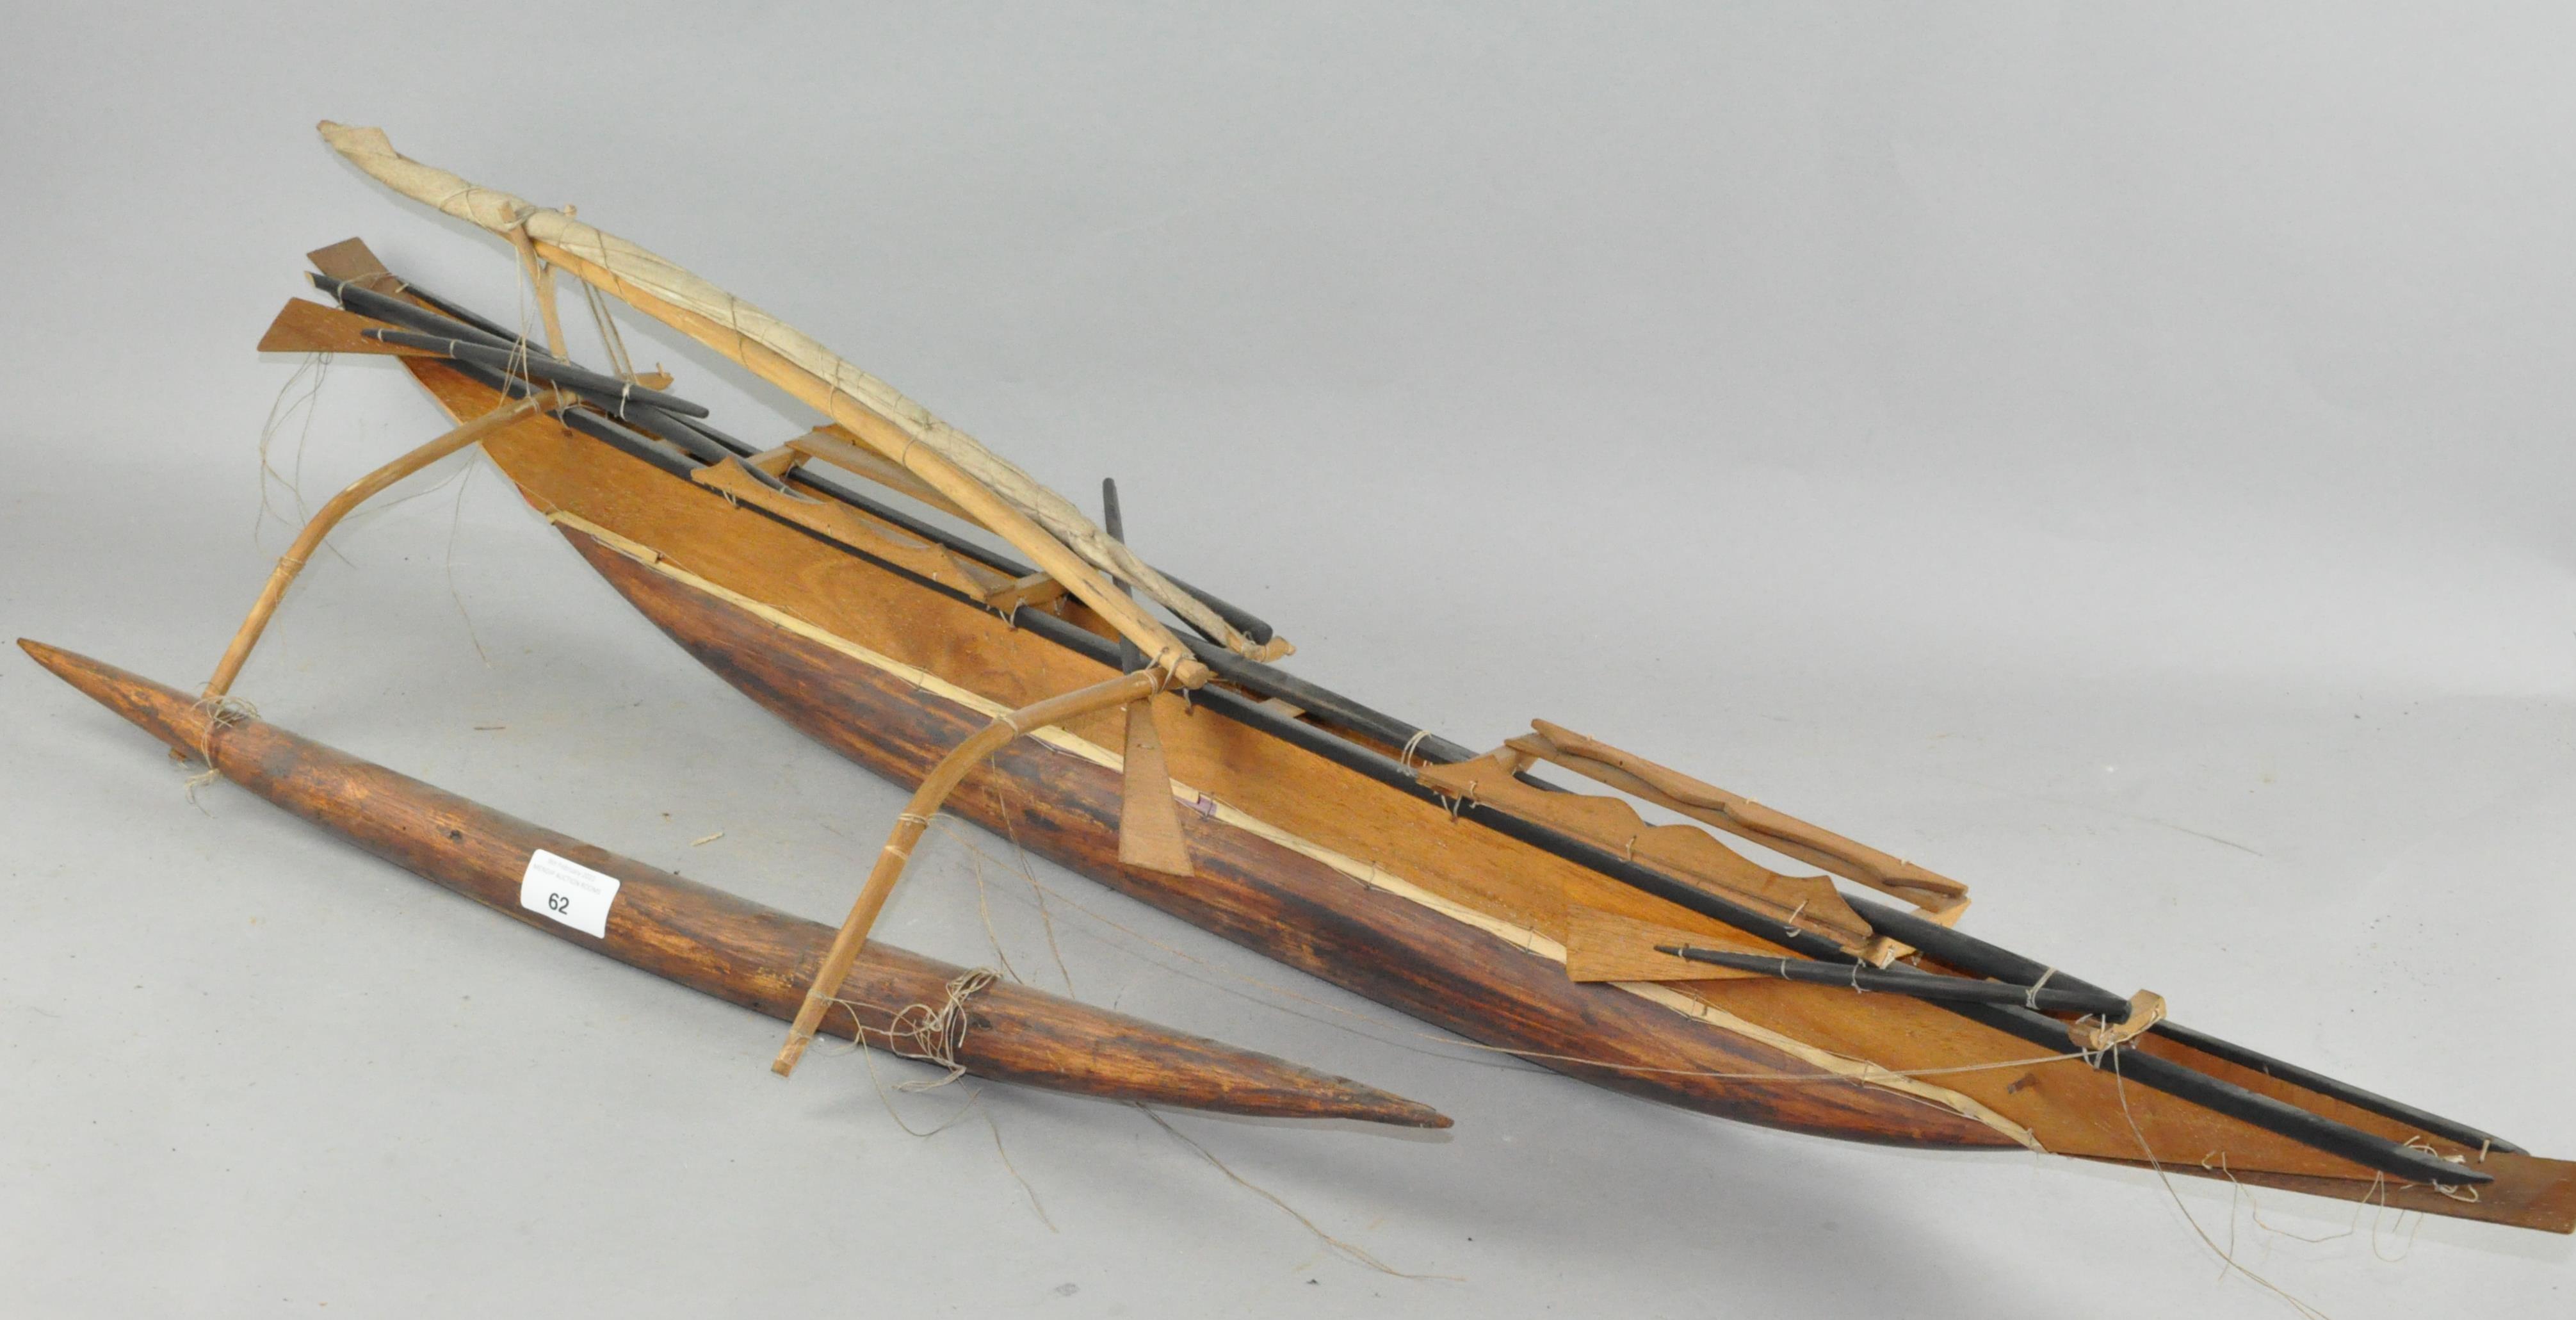 A scratch built wooden model of a boat,